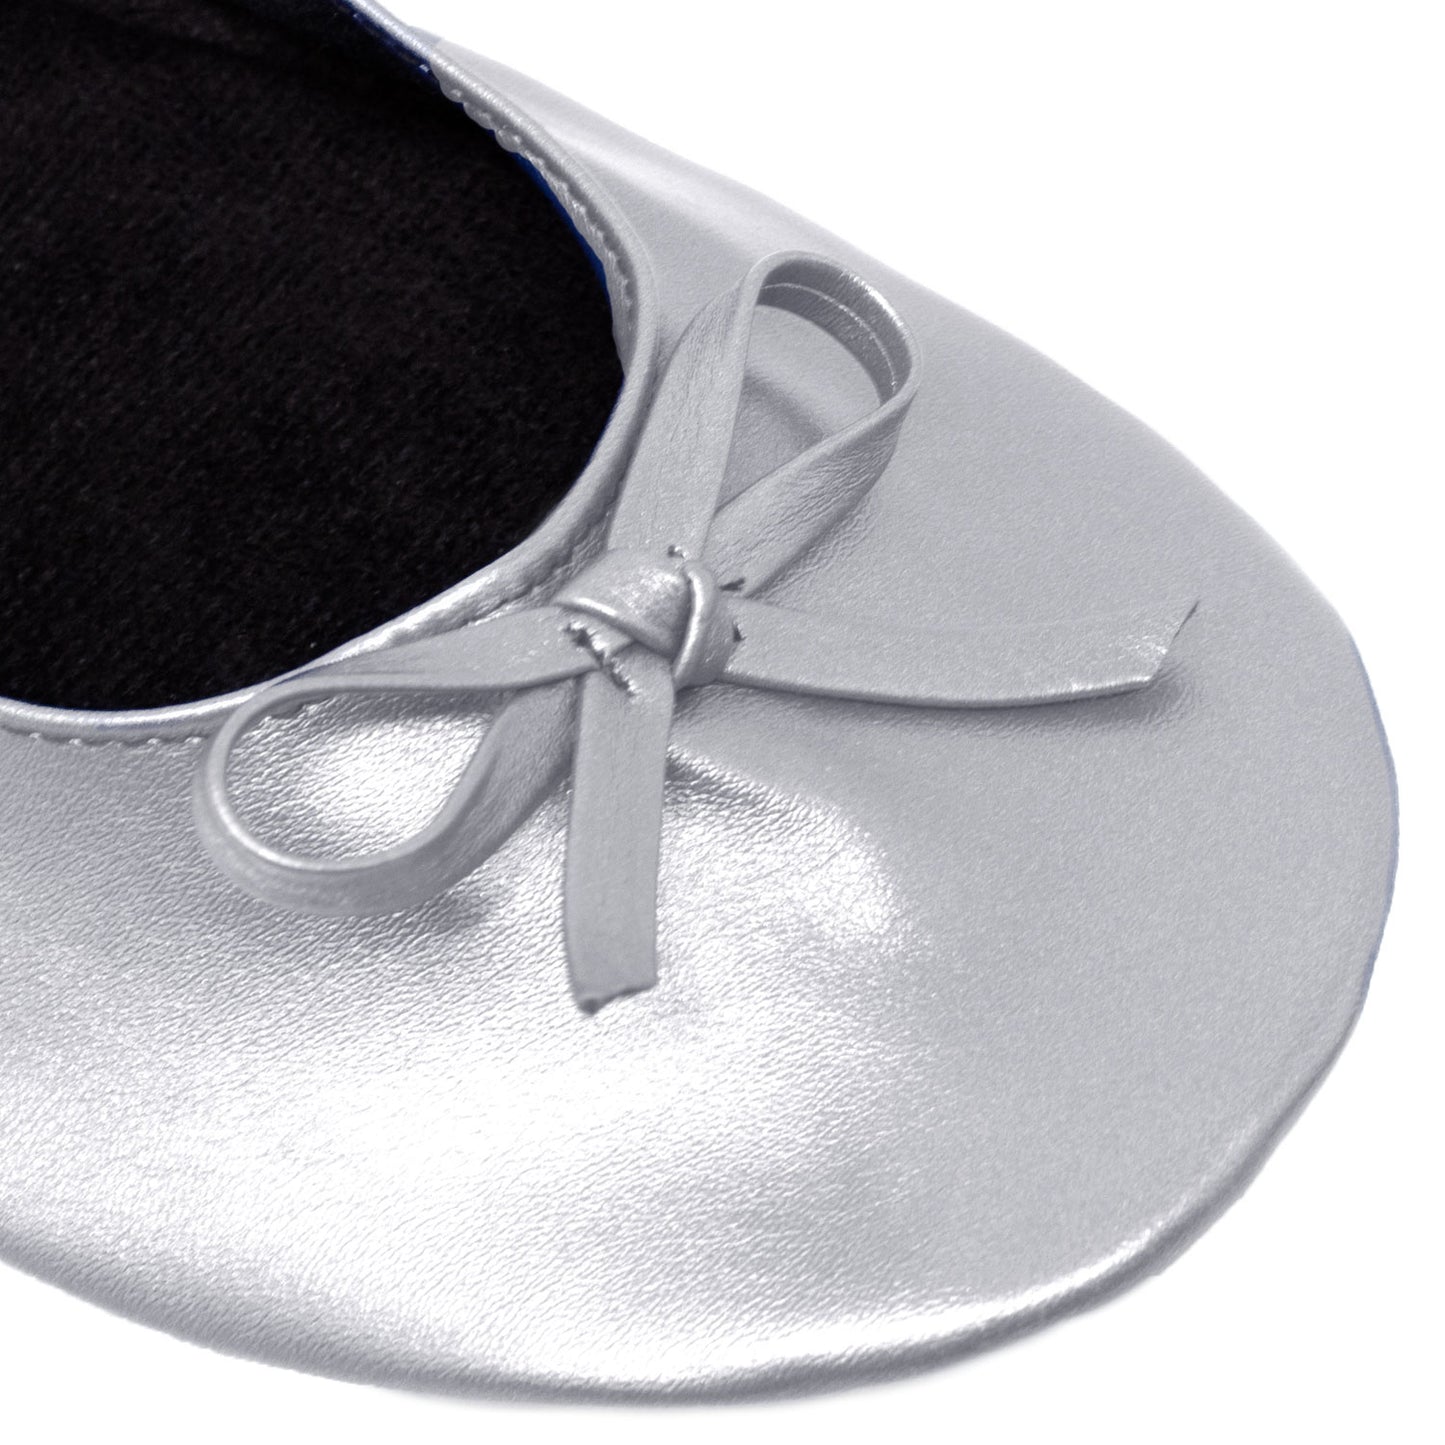 Foldable Ballet Flats Women's Travel Portable Comfortable Shoes Silver SOBEYO